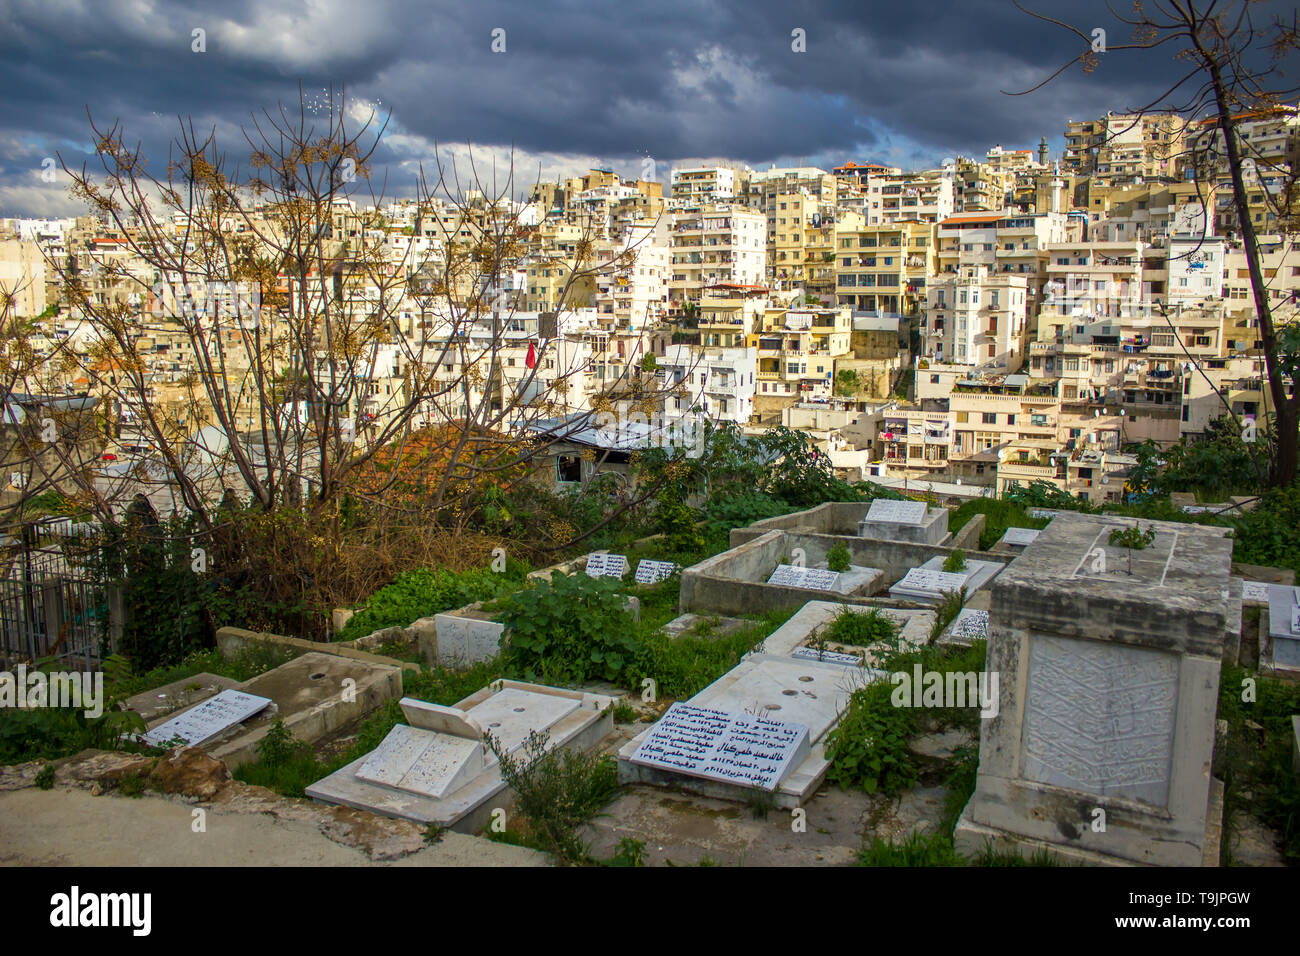 Tripoli, Libanon - Januar 15, 2016: Friedhof und Draufsicht auf Wohngebiet in Tripolis, Libanon Stockfoto